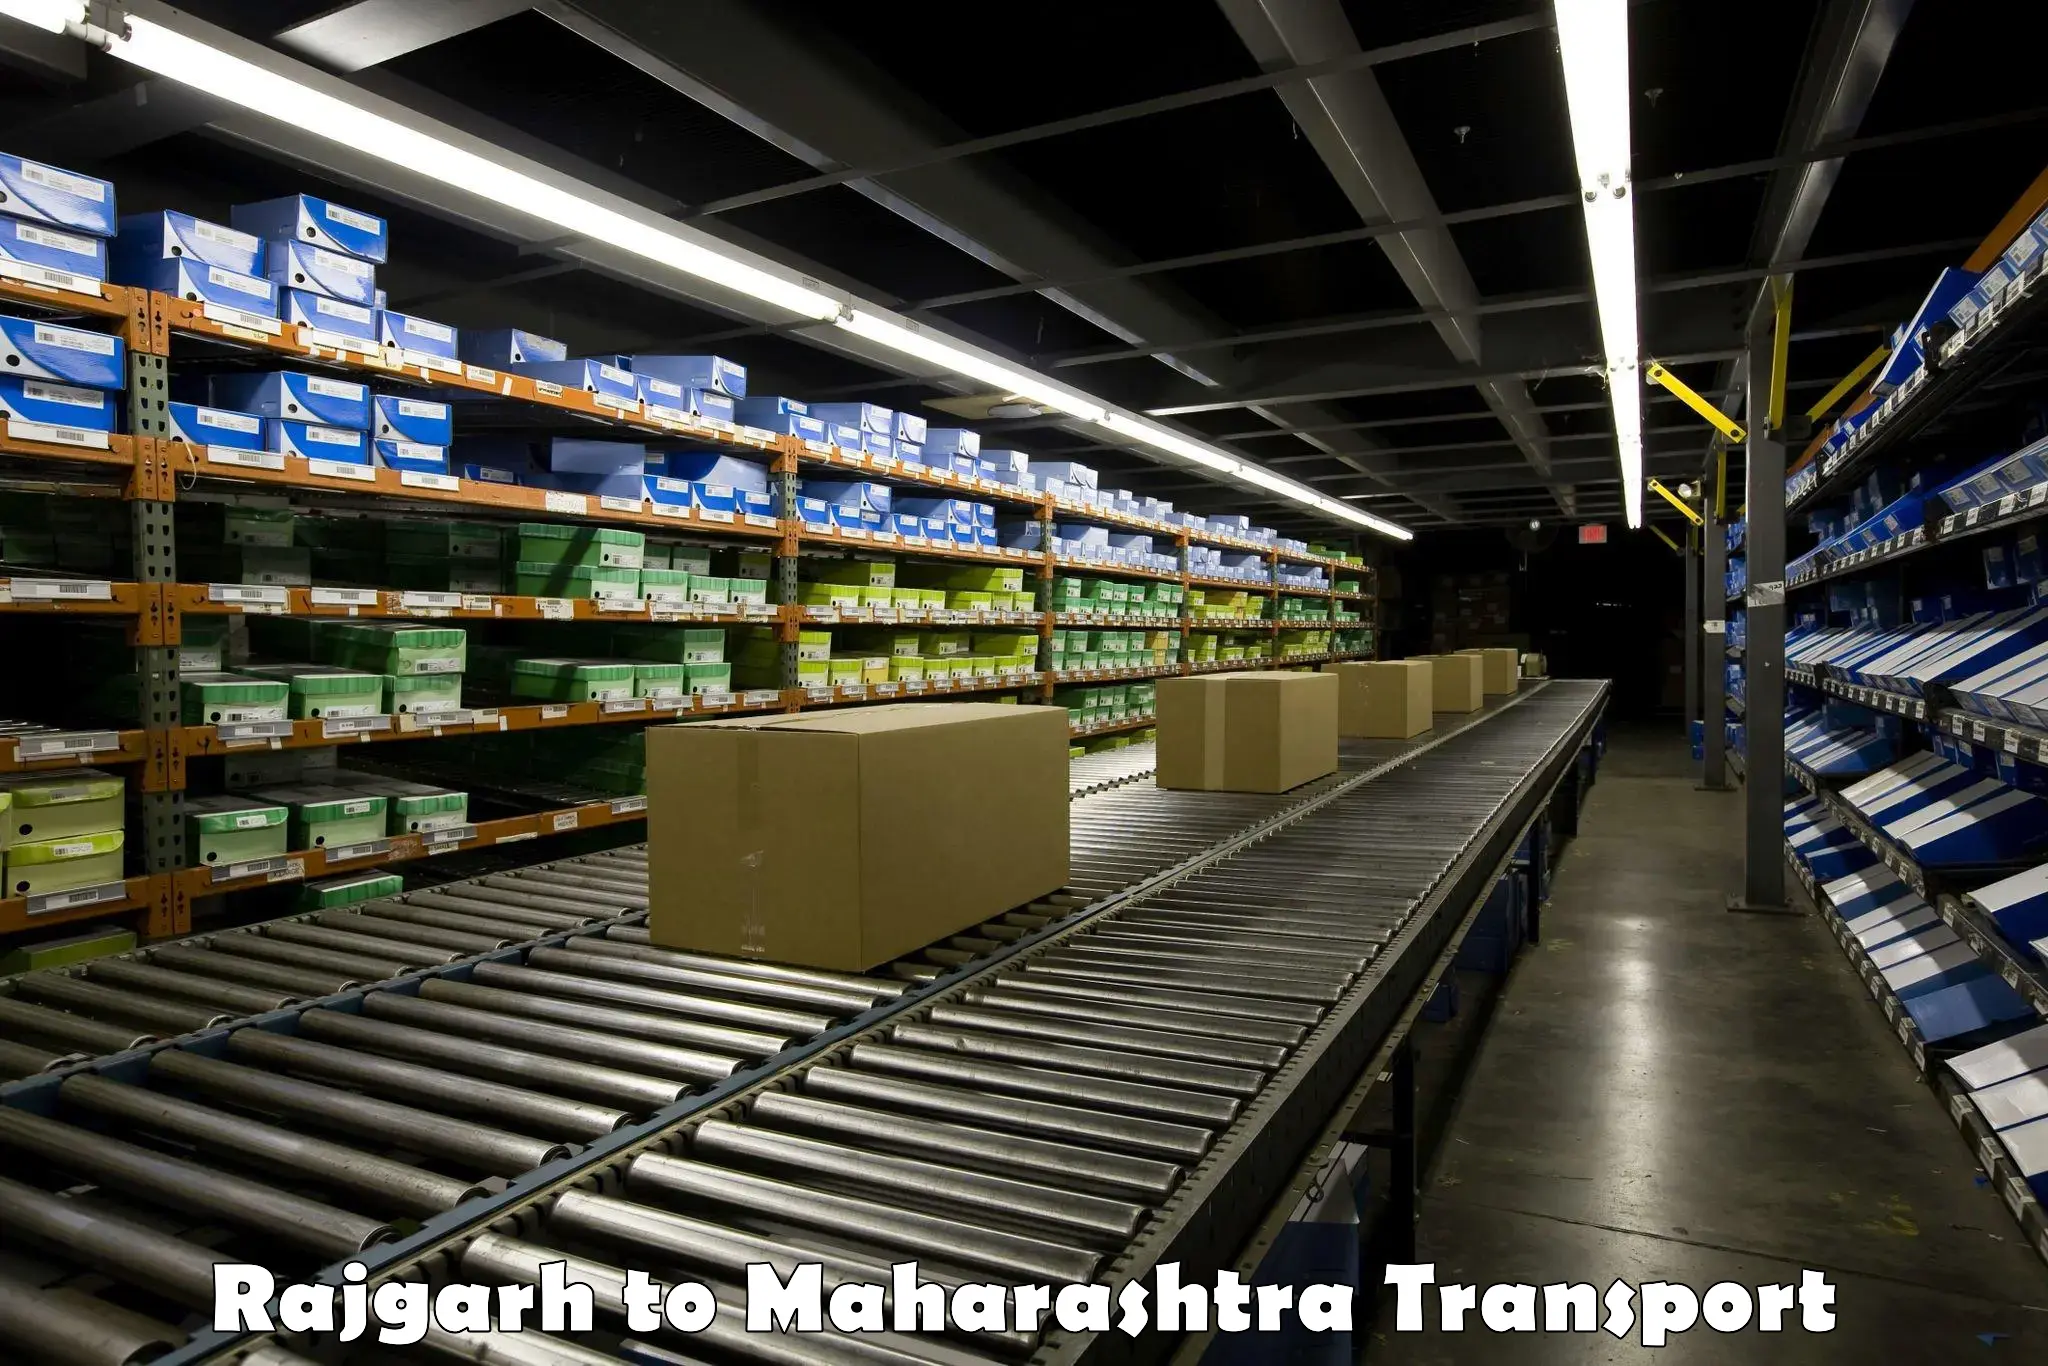 Truck transport companies in India Rajgarh to Vita